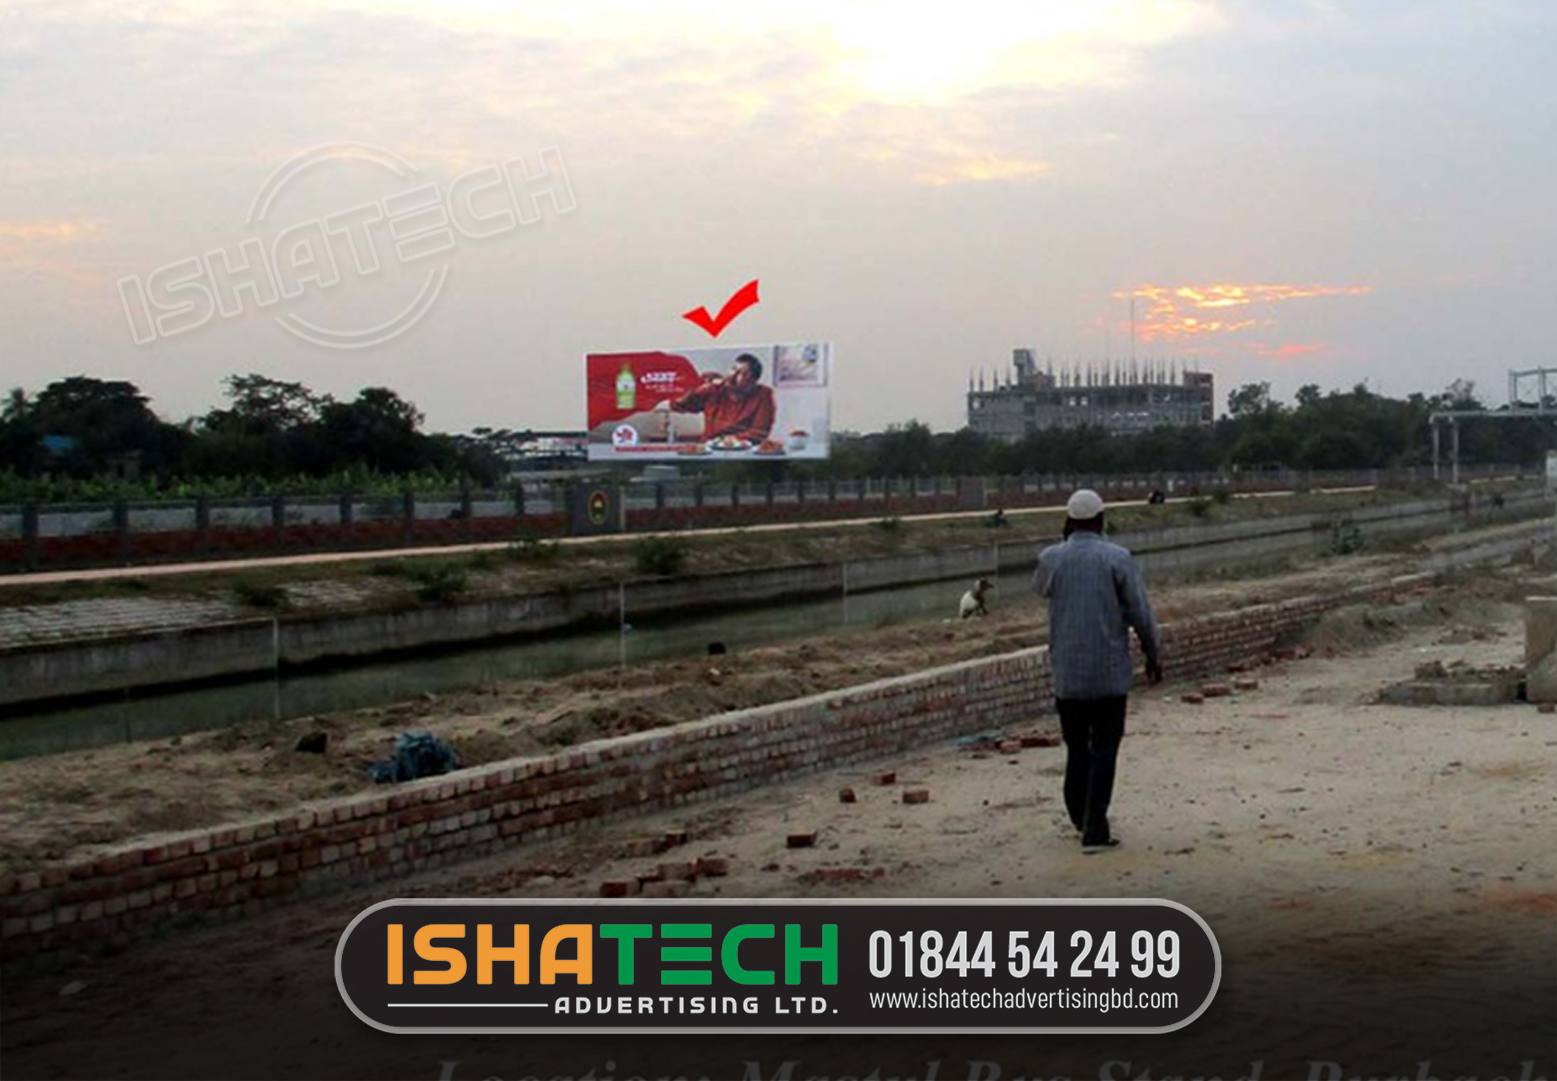 PRODUCT ADVERTISING BILLBOARD MAKING AND RENTAL SERVICE IN DHAKA, BANGLADESH